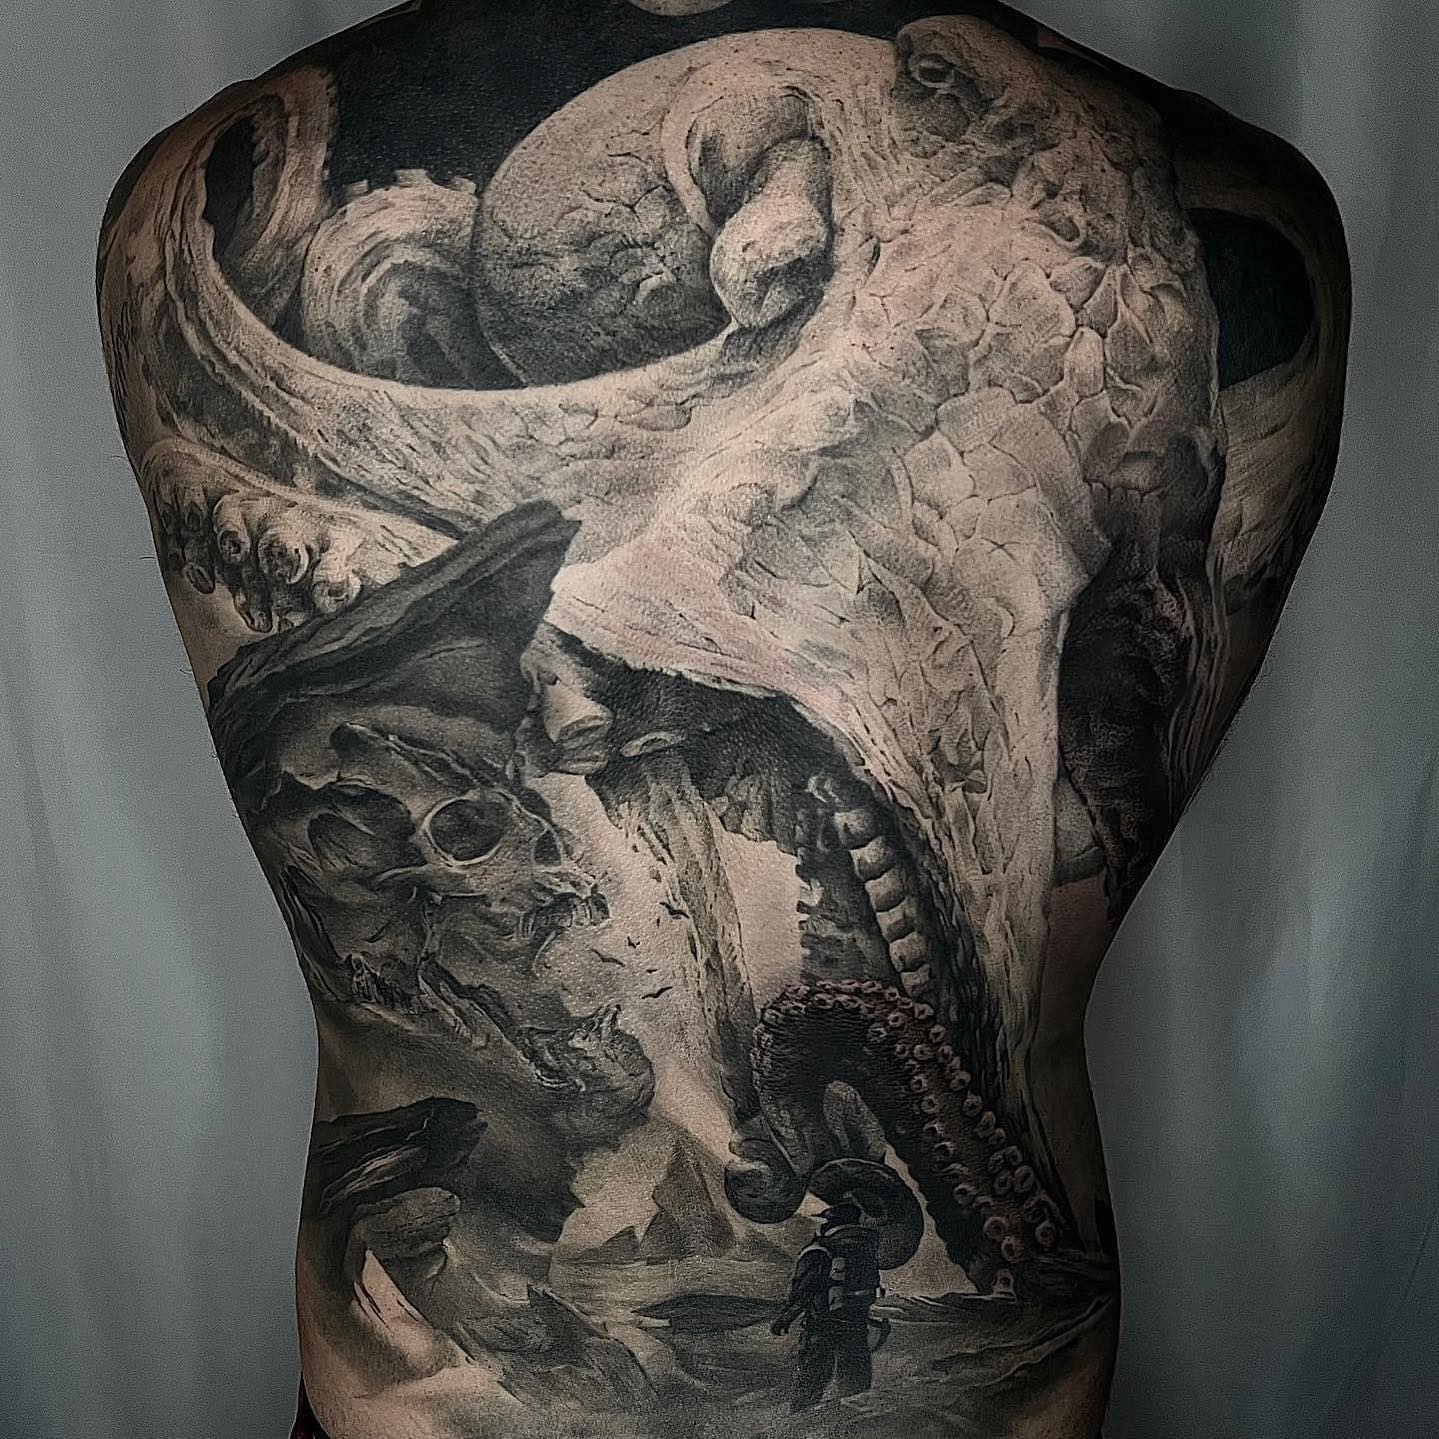 Tatuaje completo de pulpo en la espalda